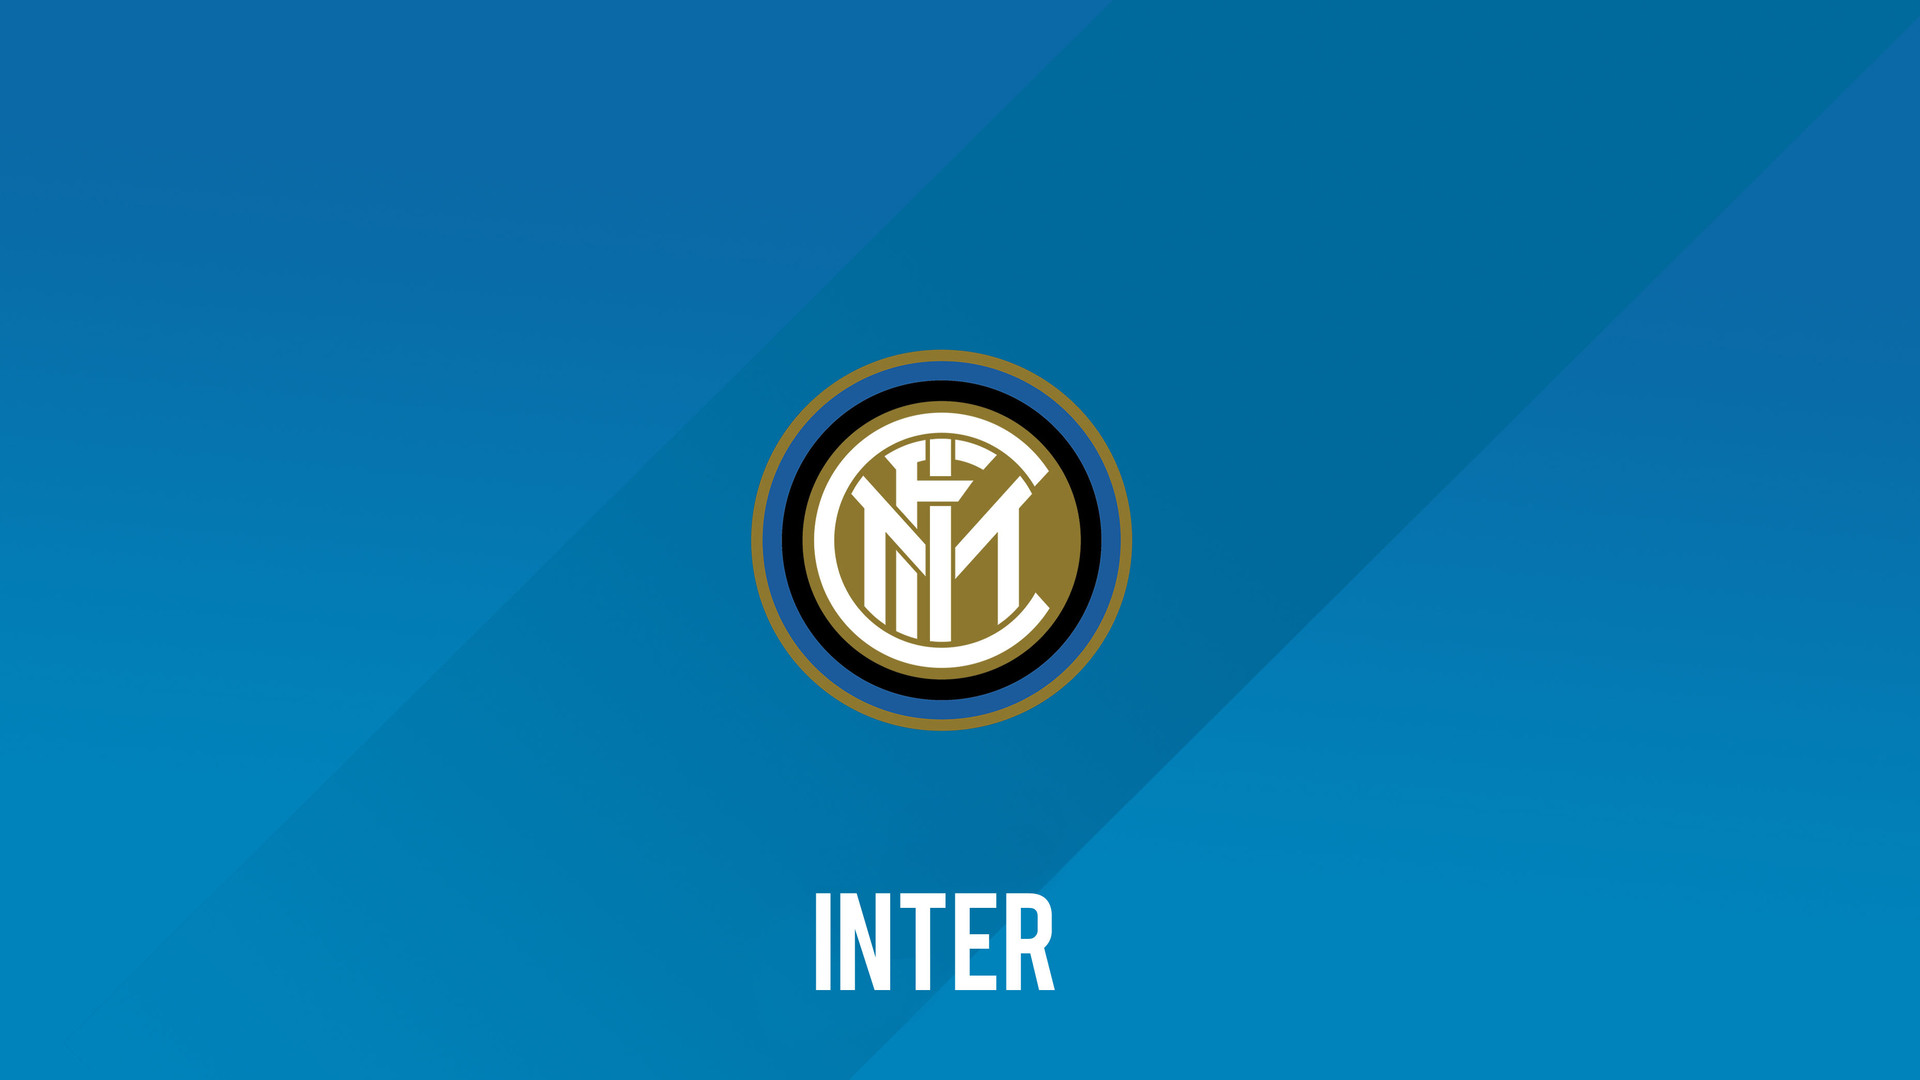 1920x1080 Inter Milan Football Club Logo Laptop Full HD 1080P HD 4k Wallpapers, Images ...